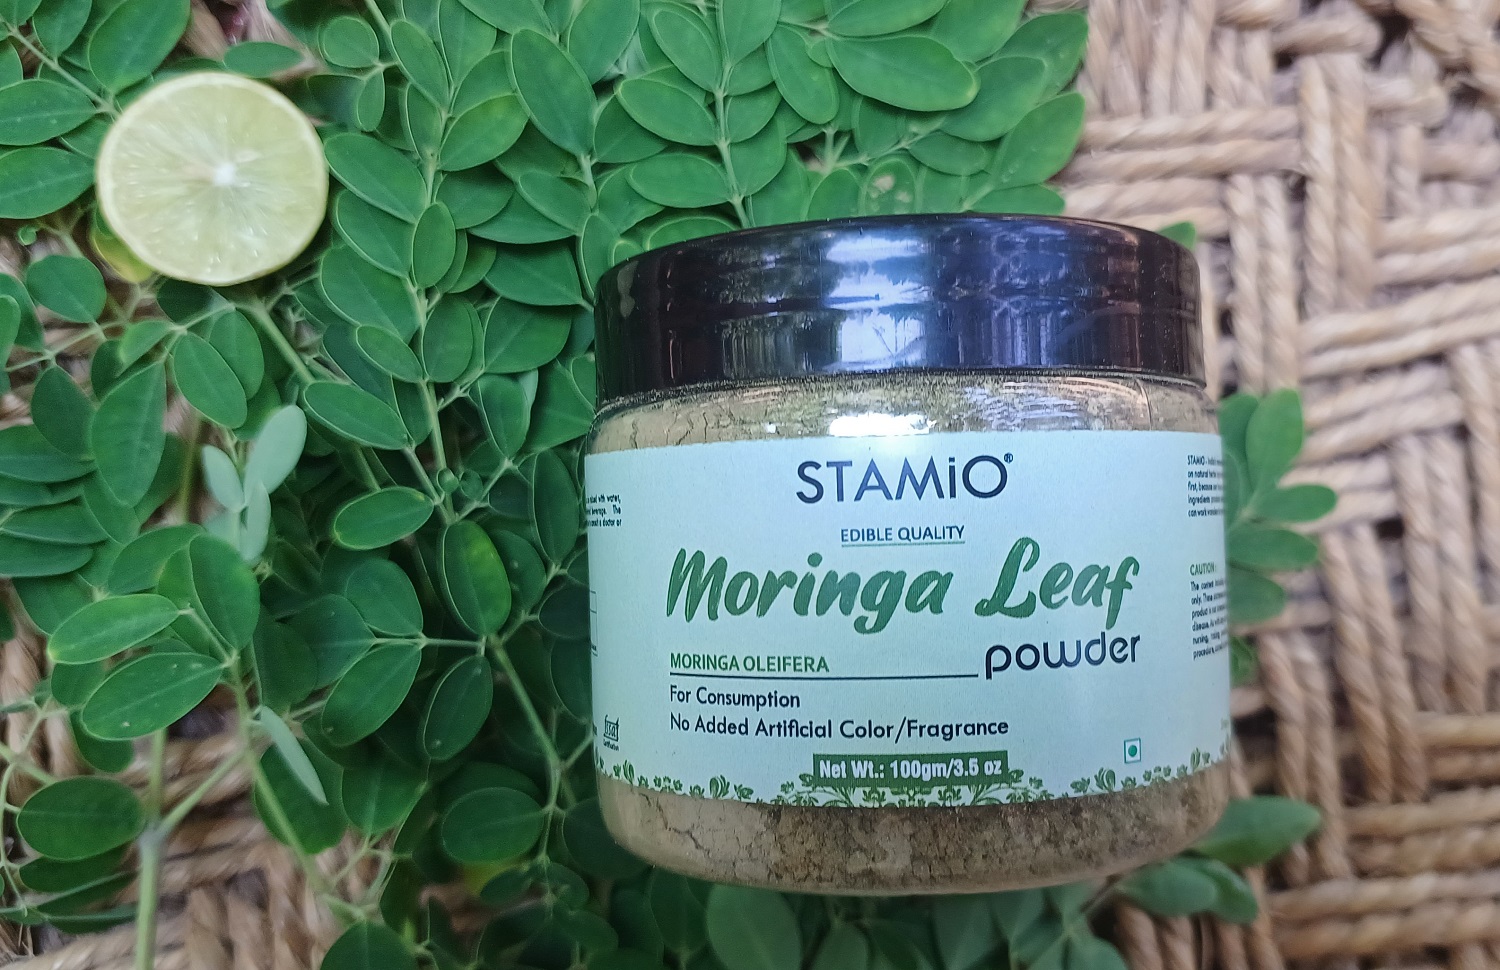 Stamio Moringa Powder Benefits